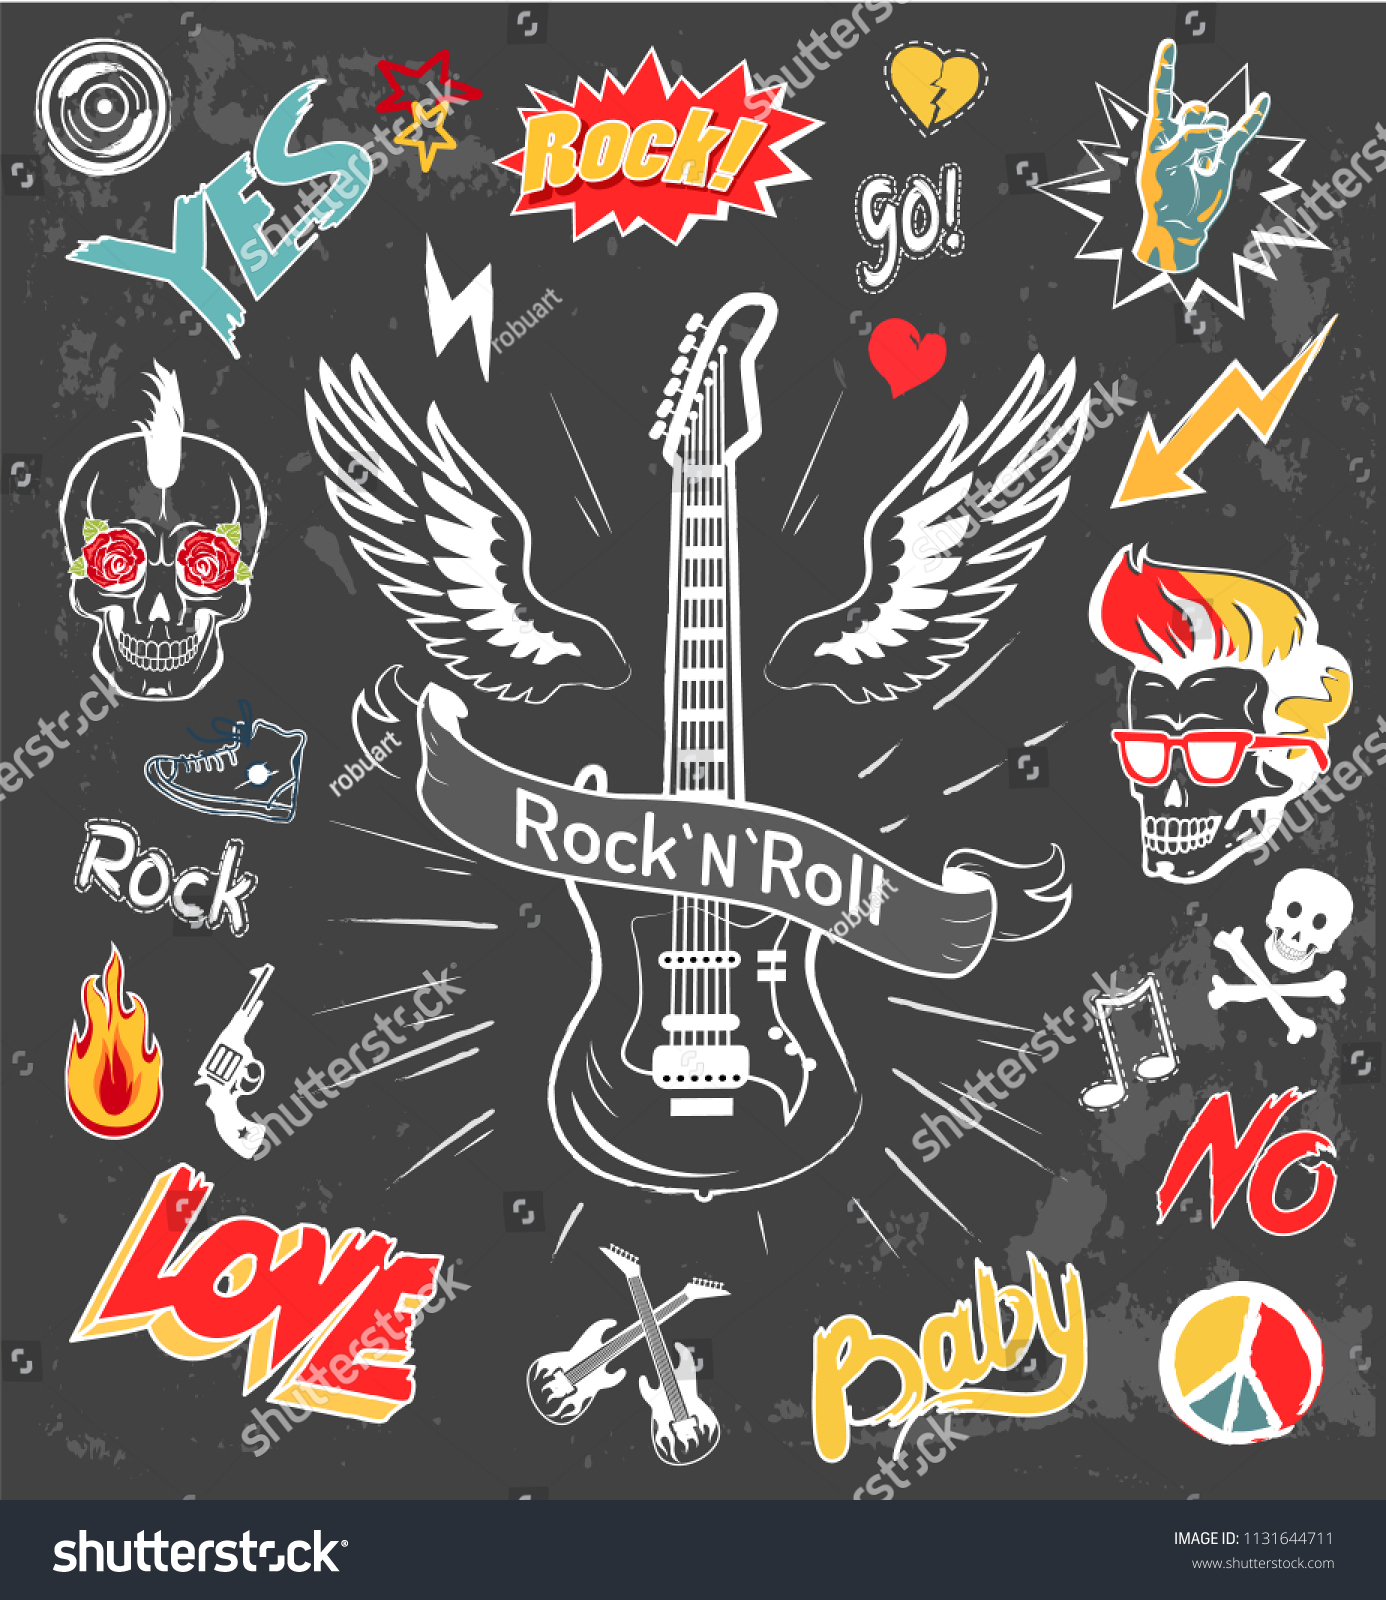 I rock n roll. Символ рок н ролла. Рок символы. Надпись рок-н-ролл. Надписи в стиле рок н ролл.